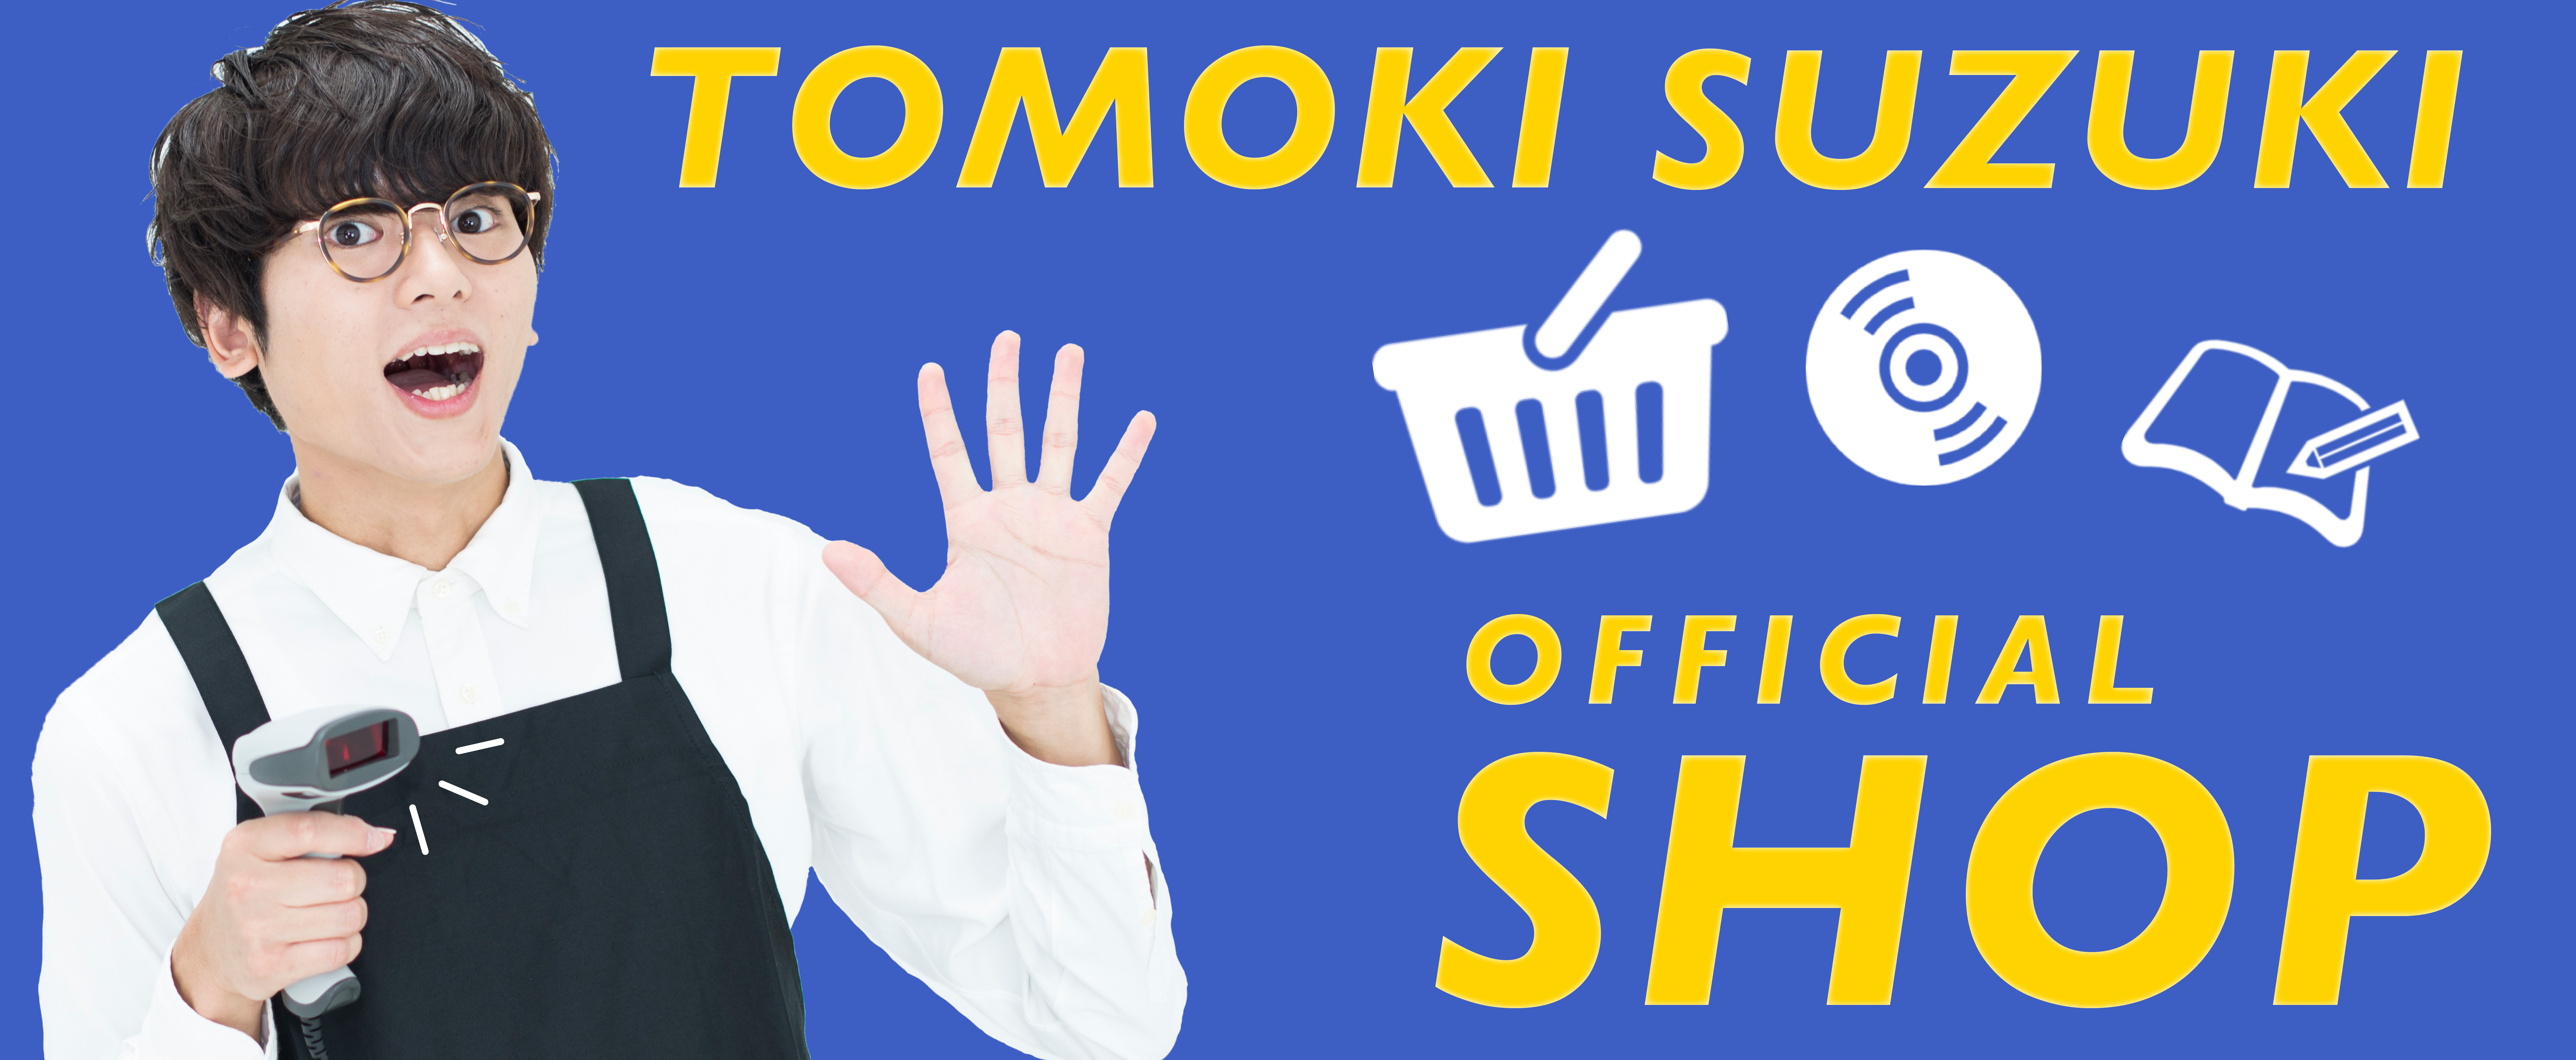 Tomoki Suzuki Official Shop